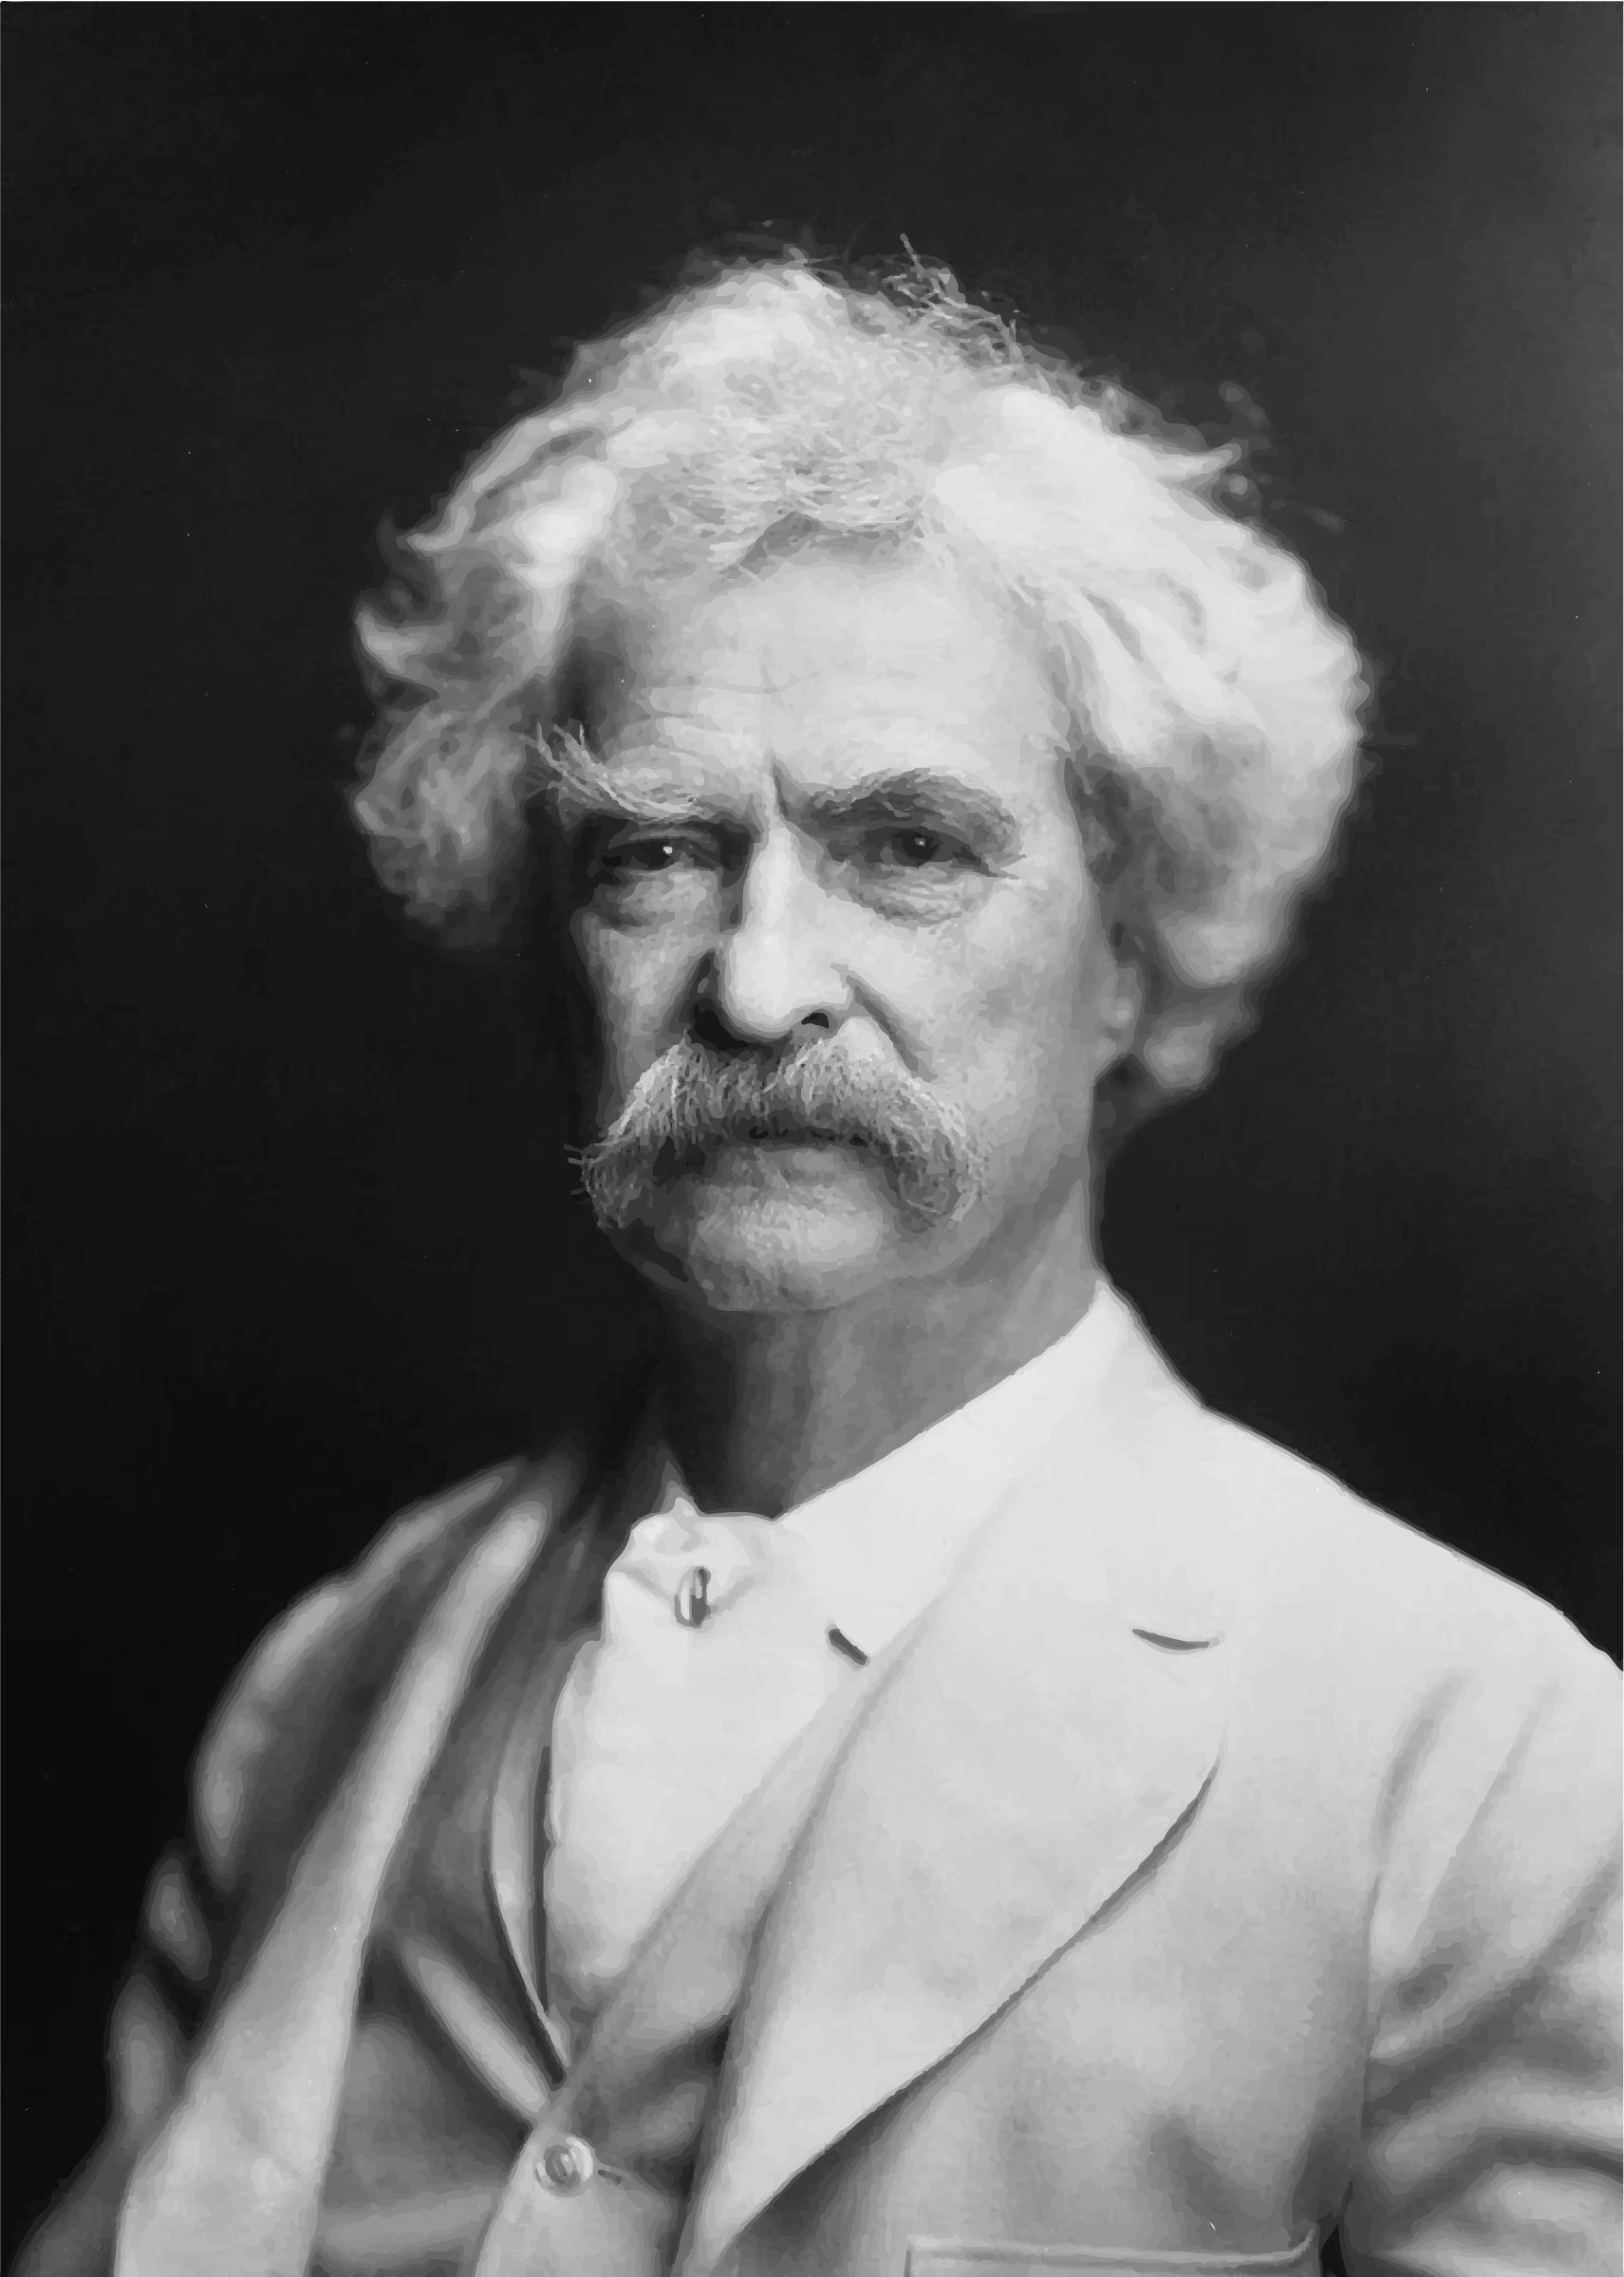 Mark Twain u201c